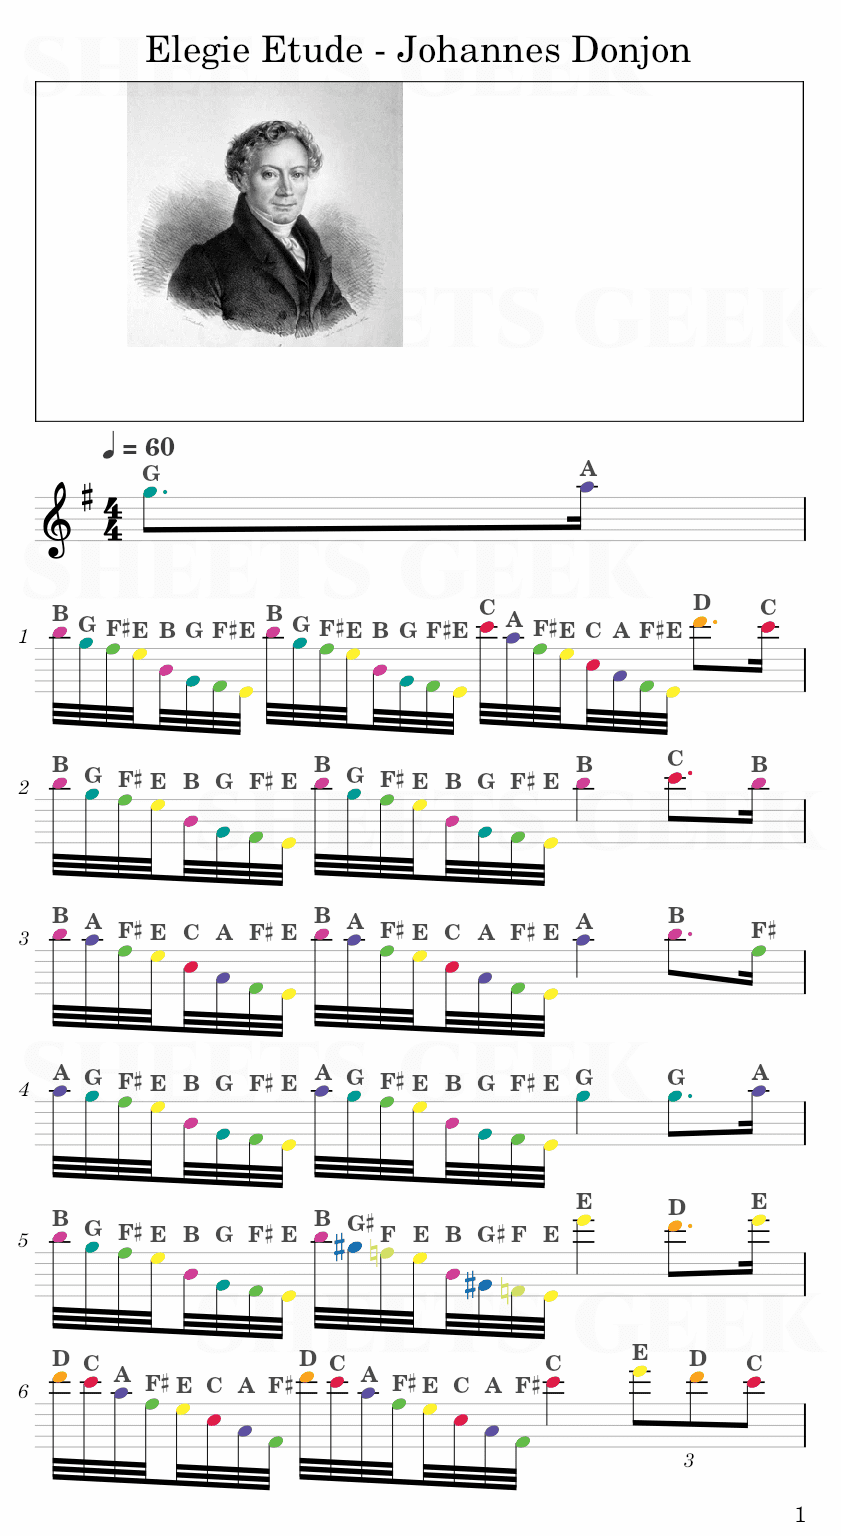 Elegie Etude - Johannes Donjon Easy Sheet Music Free for piano, keyboard, flute, violin, sax, cello page 1